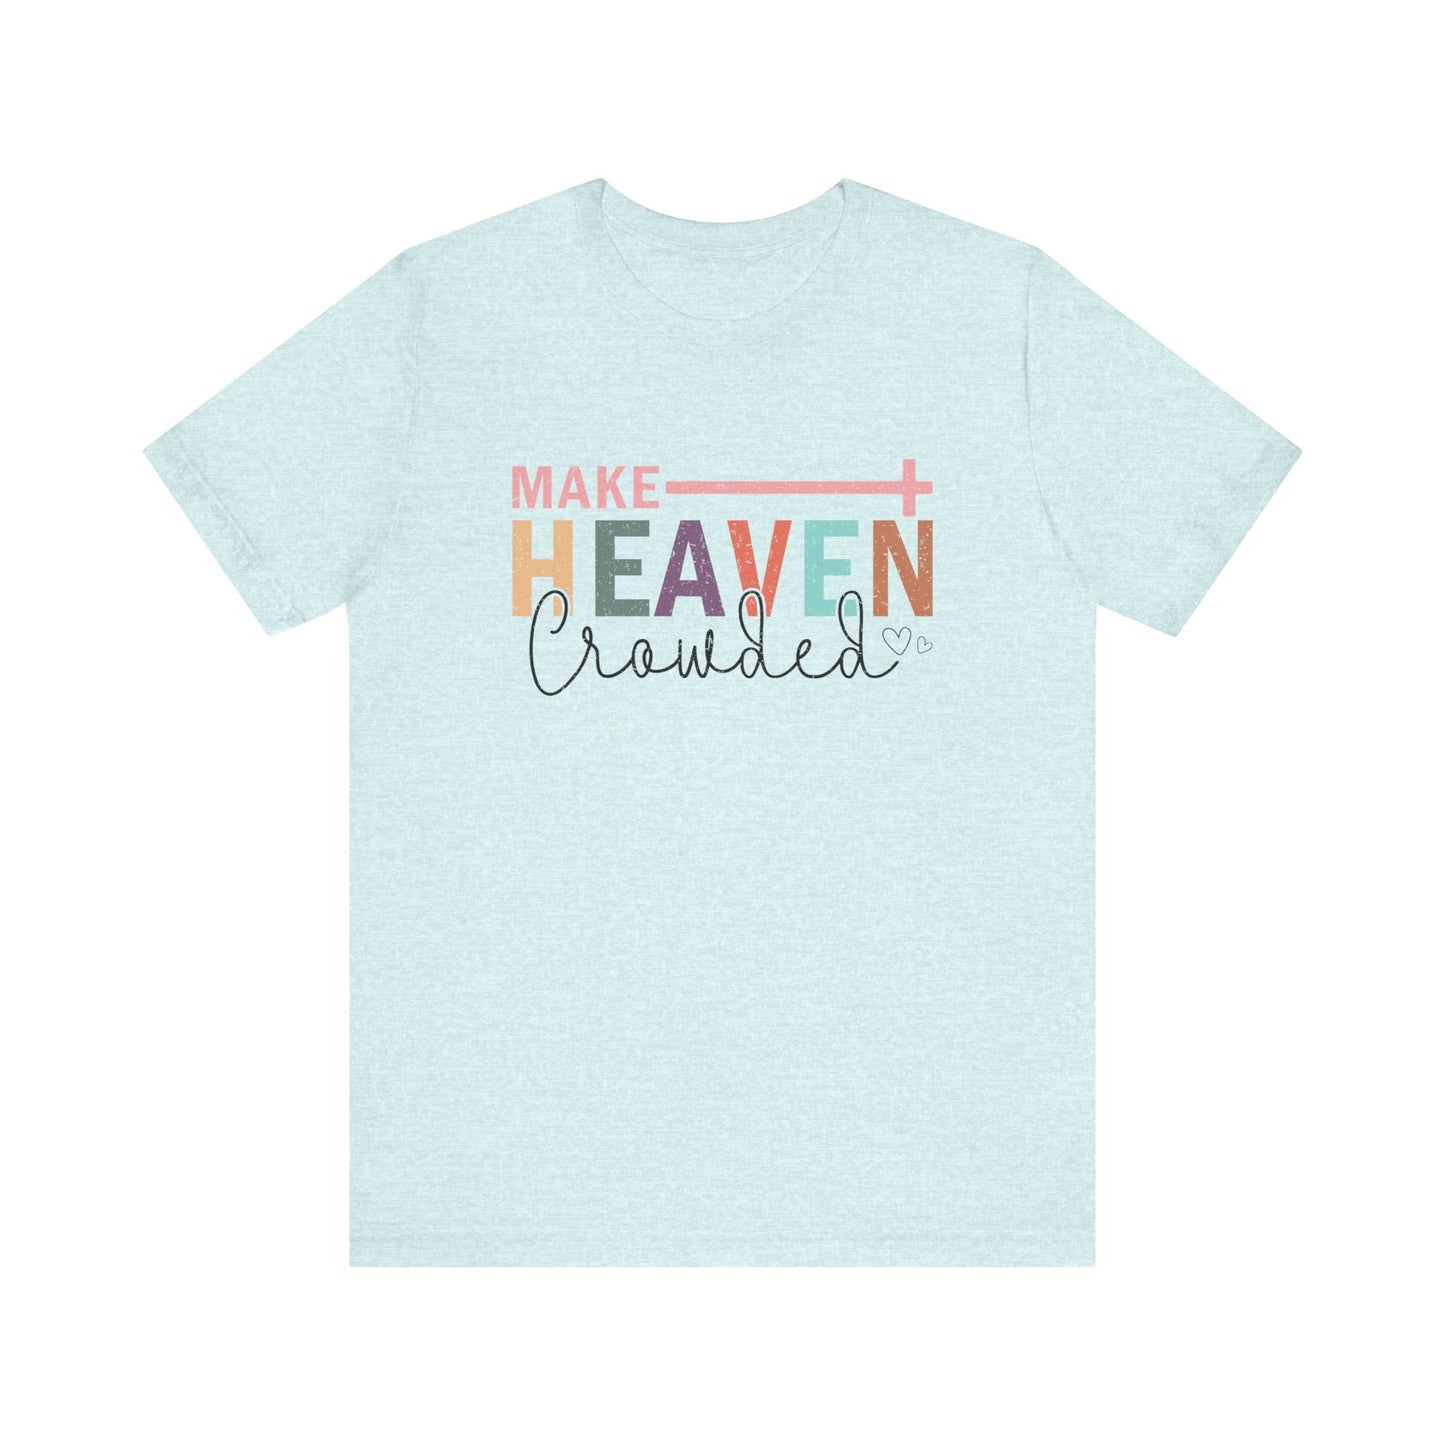 Make Heaven Crowded Women's Short Sleeve Tee